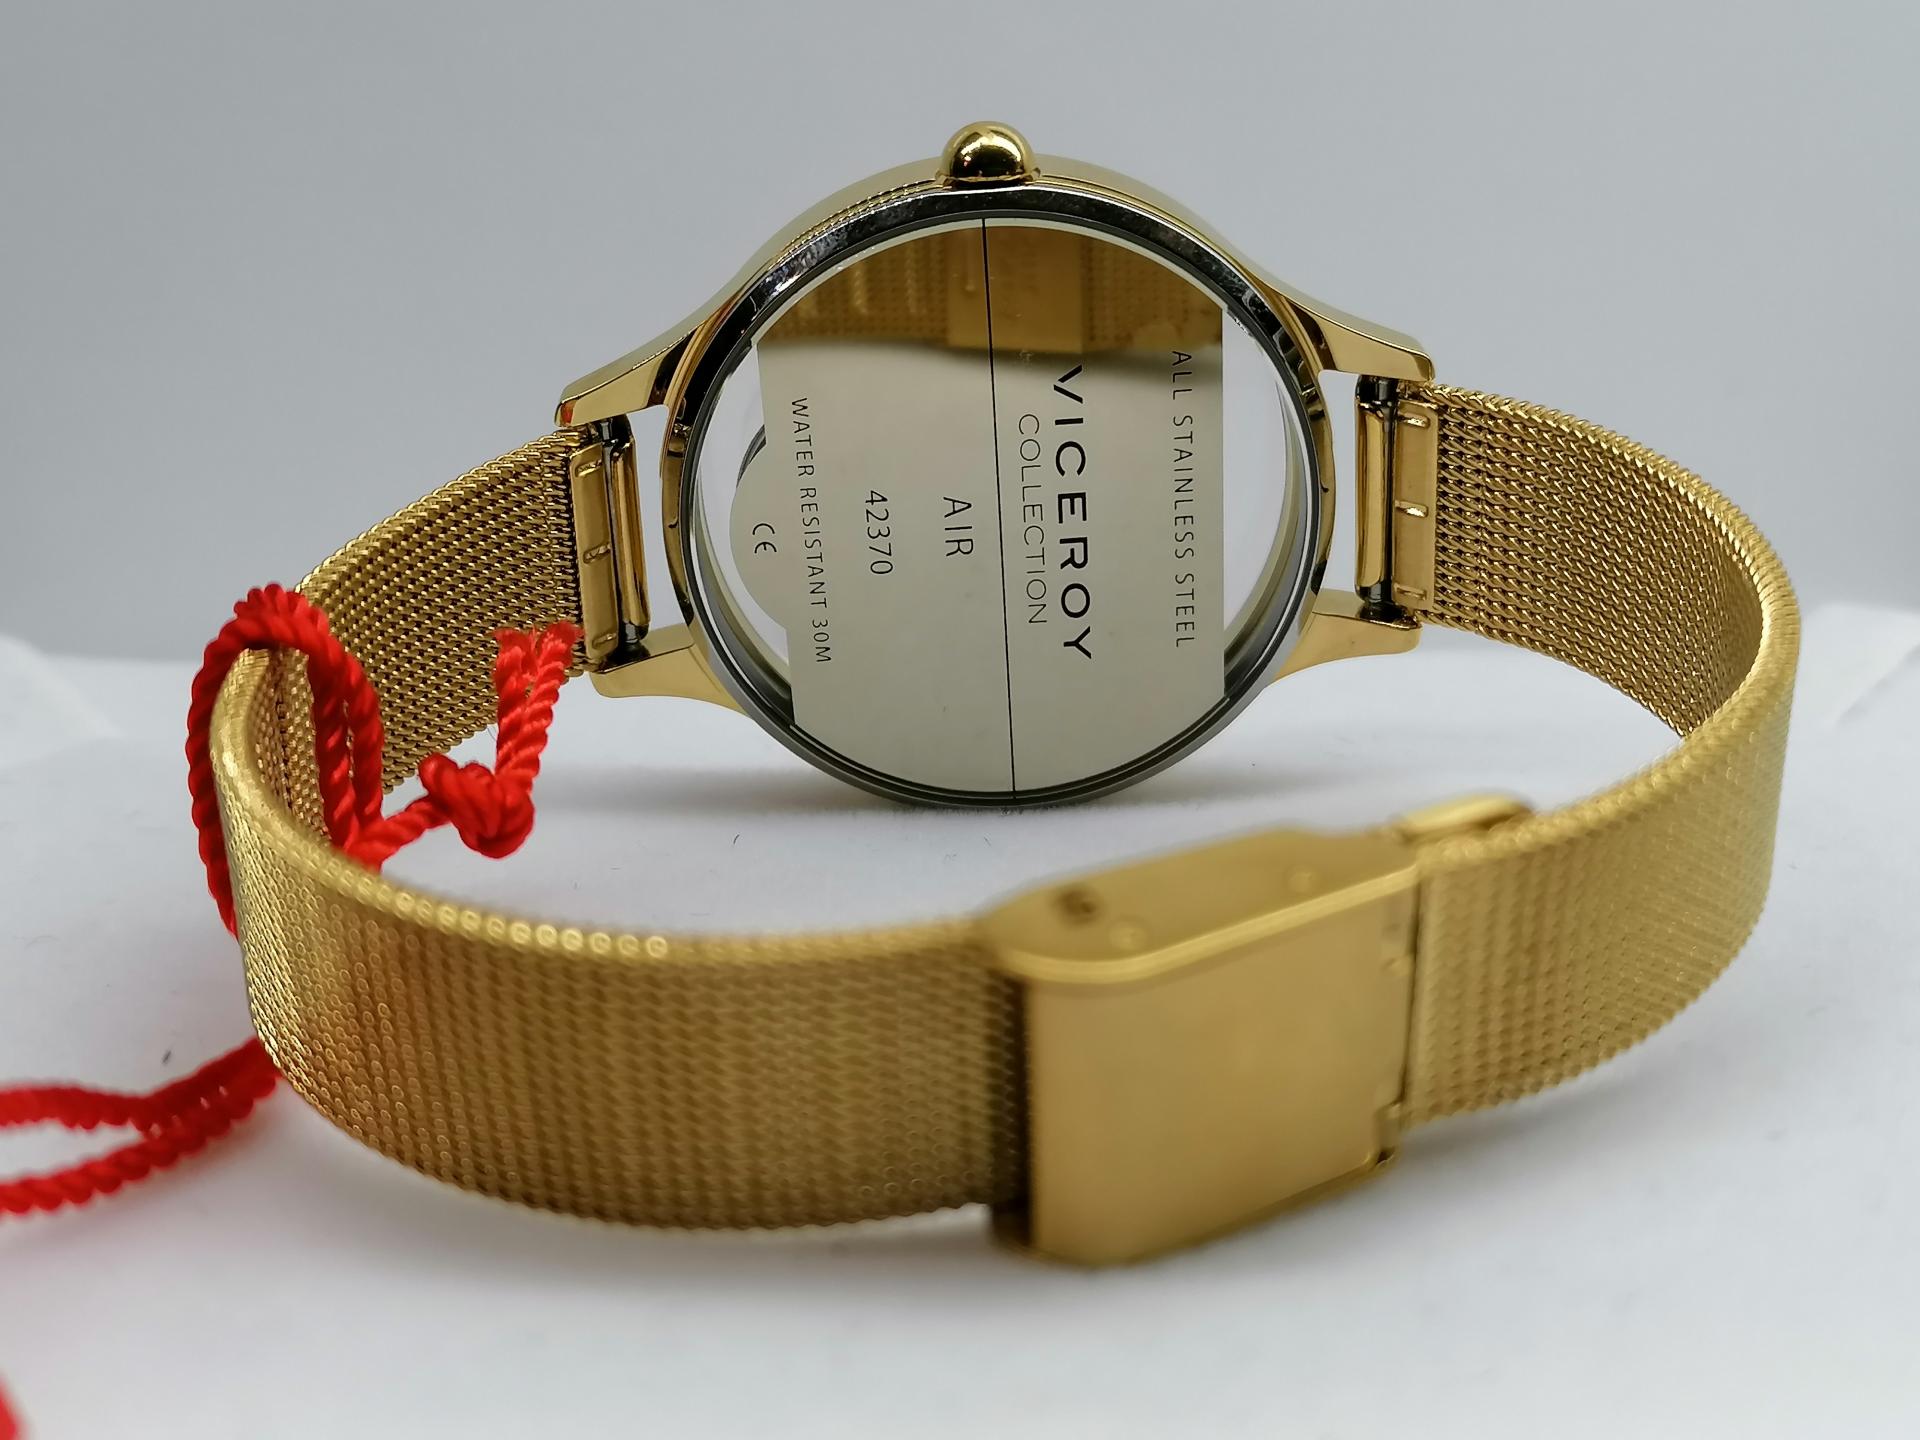 Pack Reloj + pulsera Viceroy Mujer 42362-56